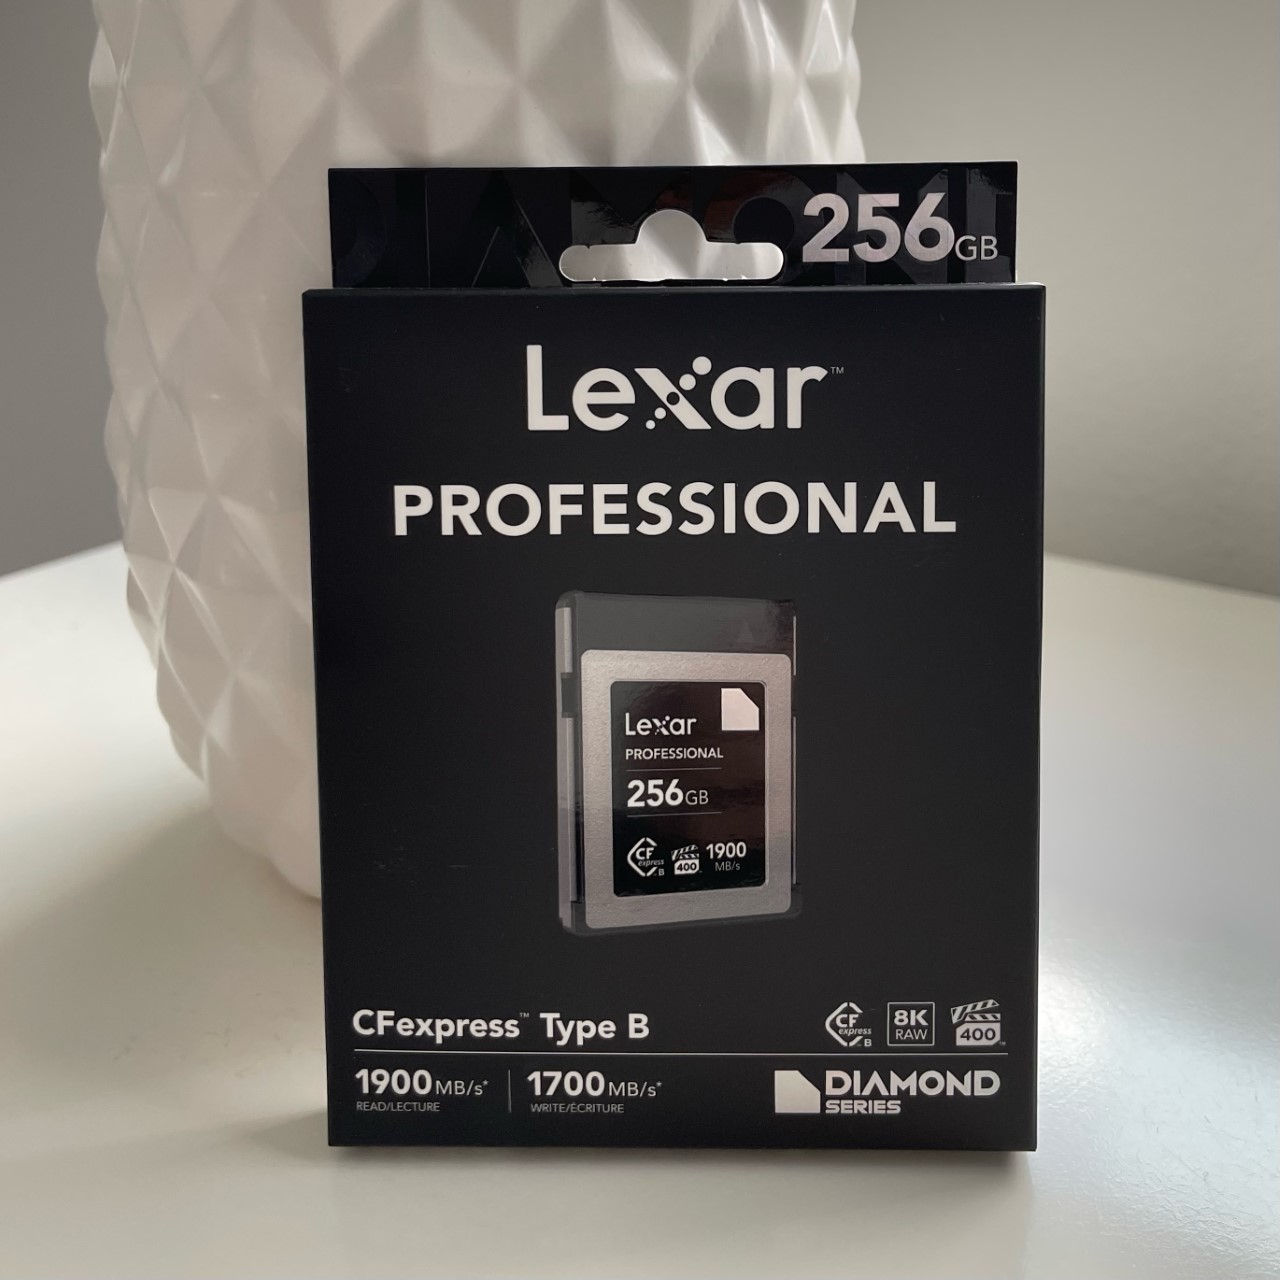 Quick Look: Lexar Professional CFexpress Type B Card DIAMOND